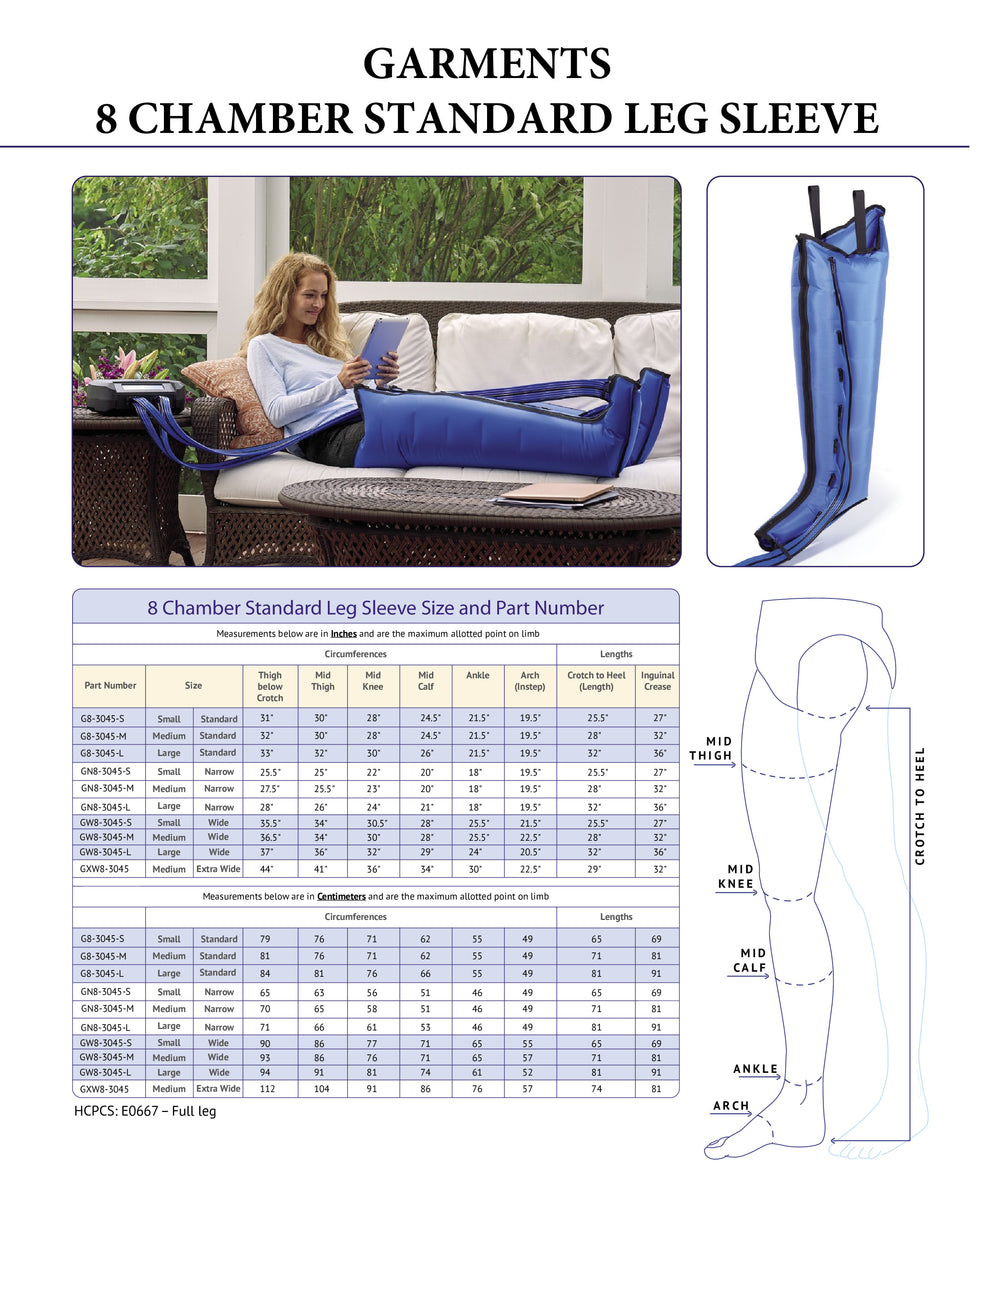 8 Chamber Compression Leg Garment - Narrow